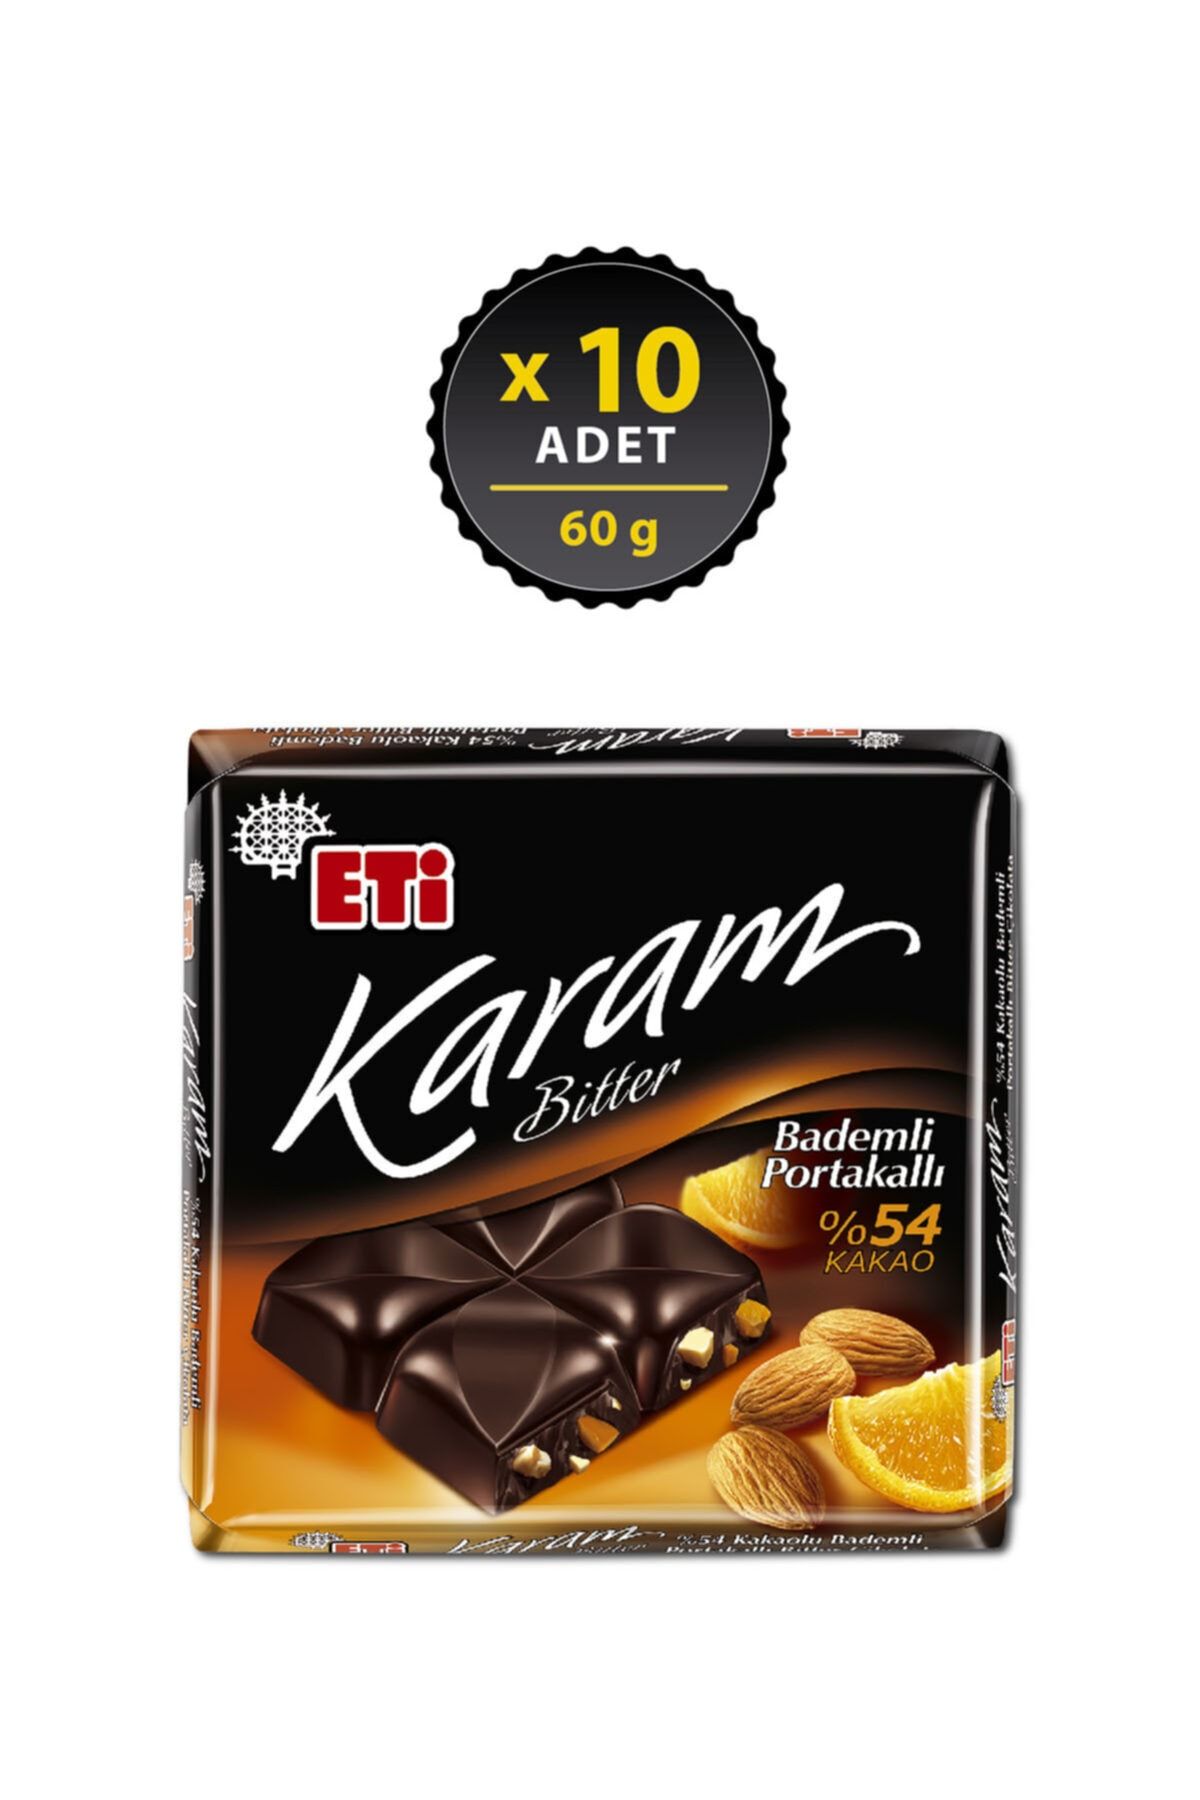 Eti Karam %54 Kakaolu Bademli Portakallı Bitter Çikolata 60 g x 10 Adet